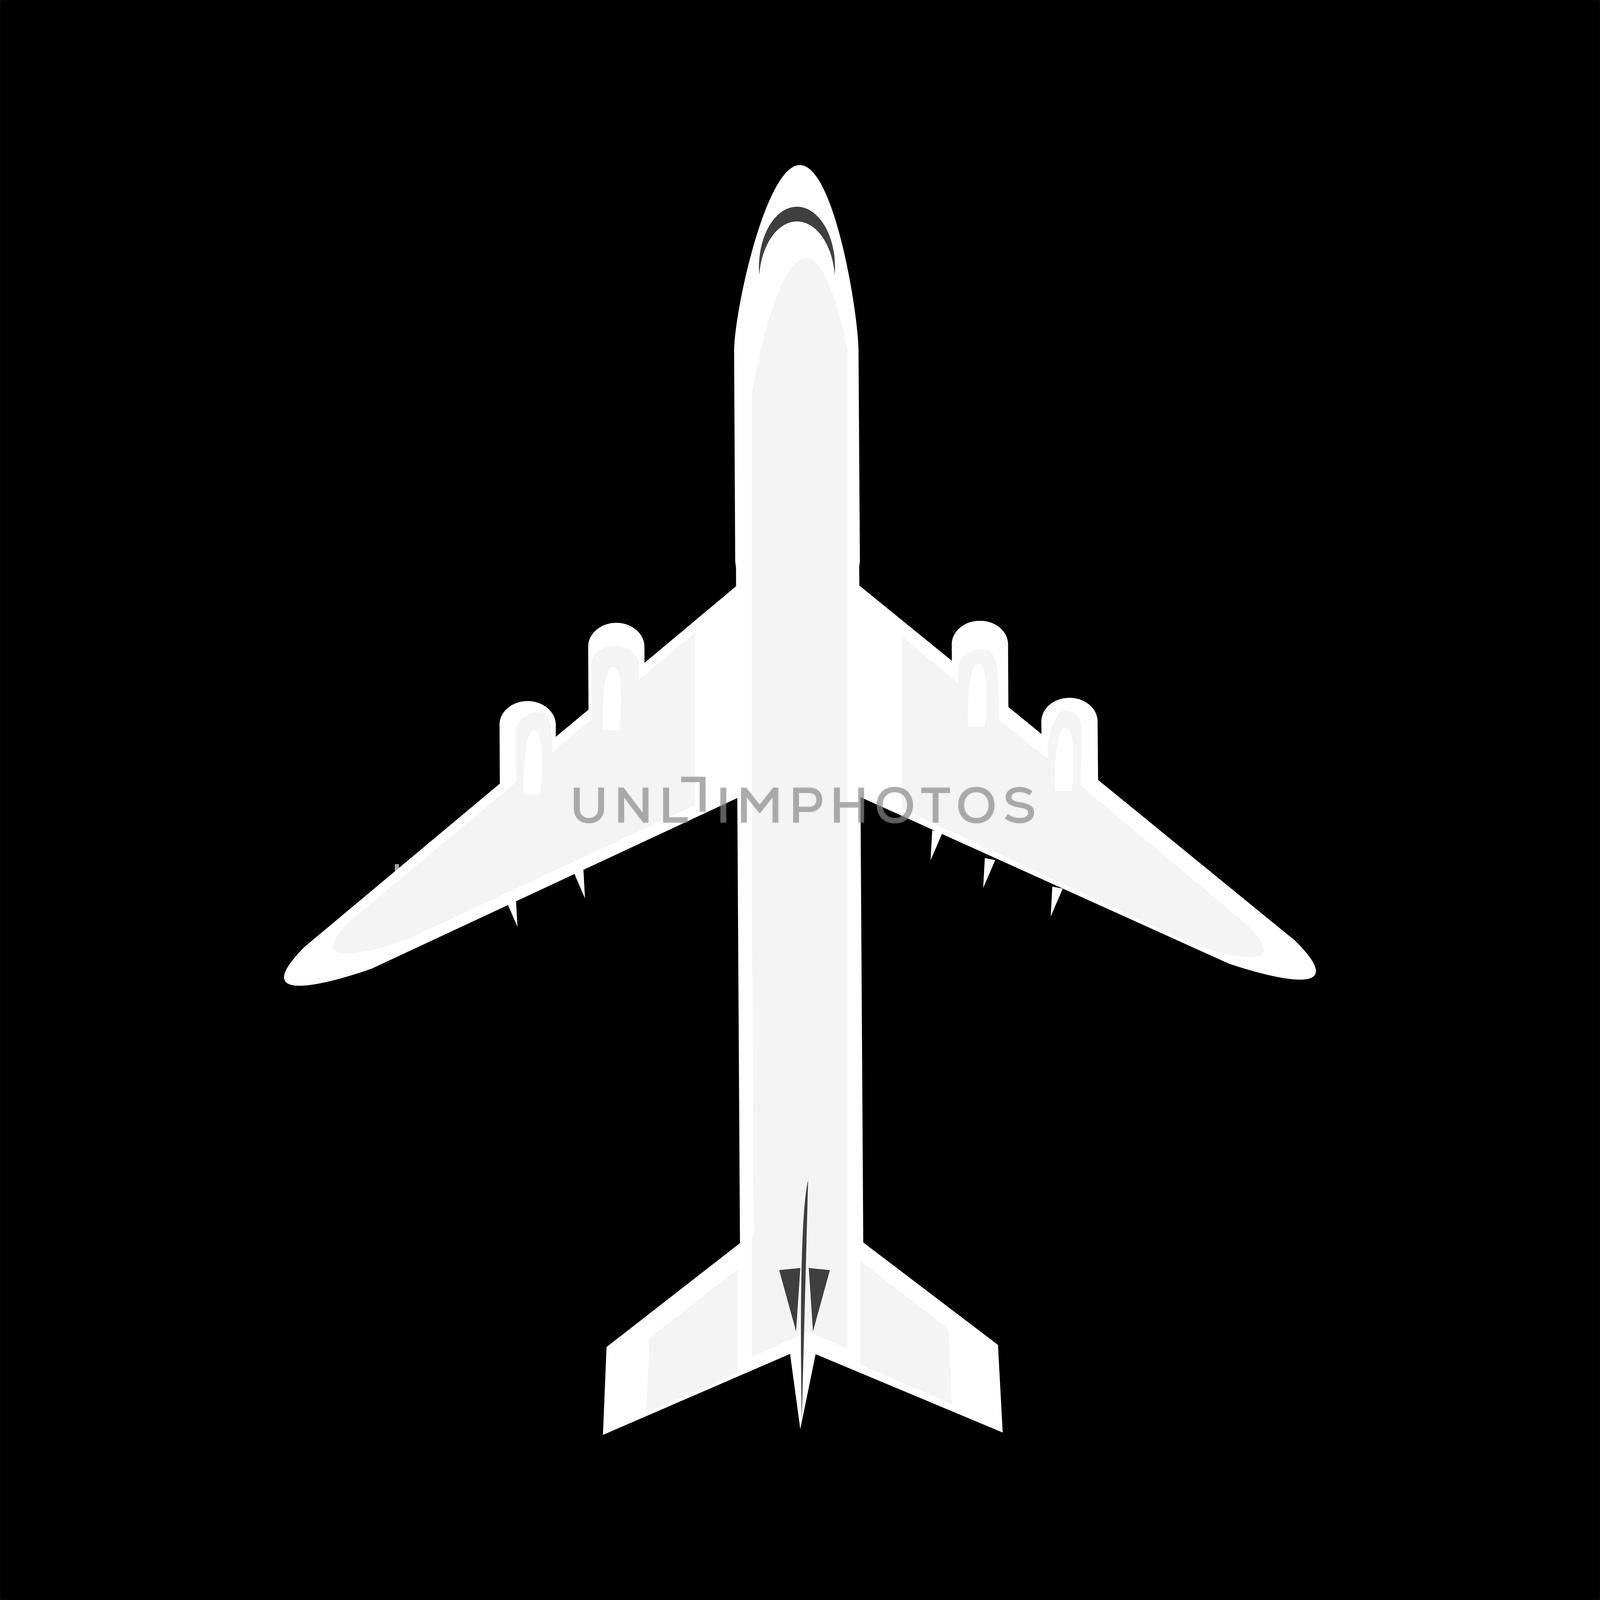 Plane isolated on black background by hibrida13